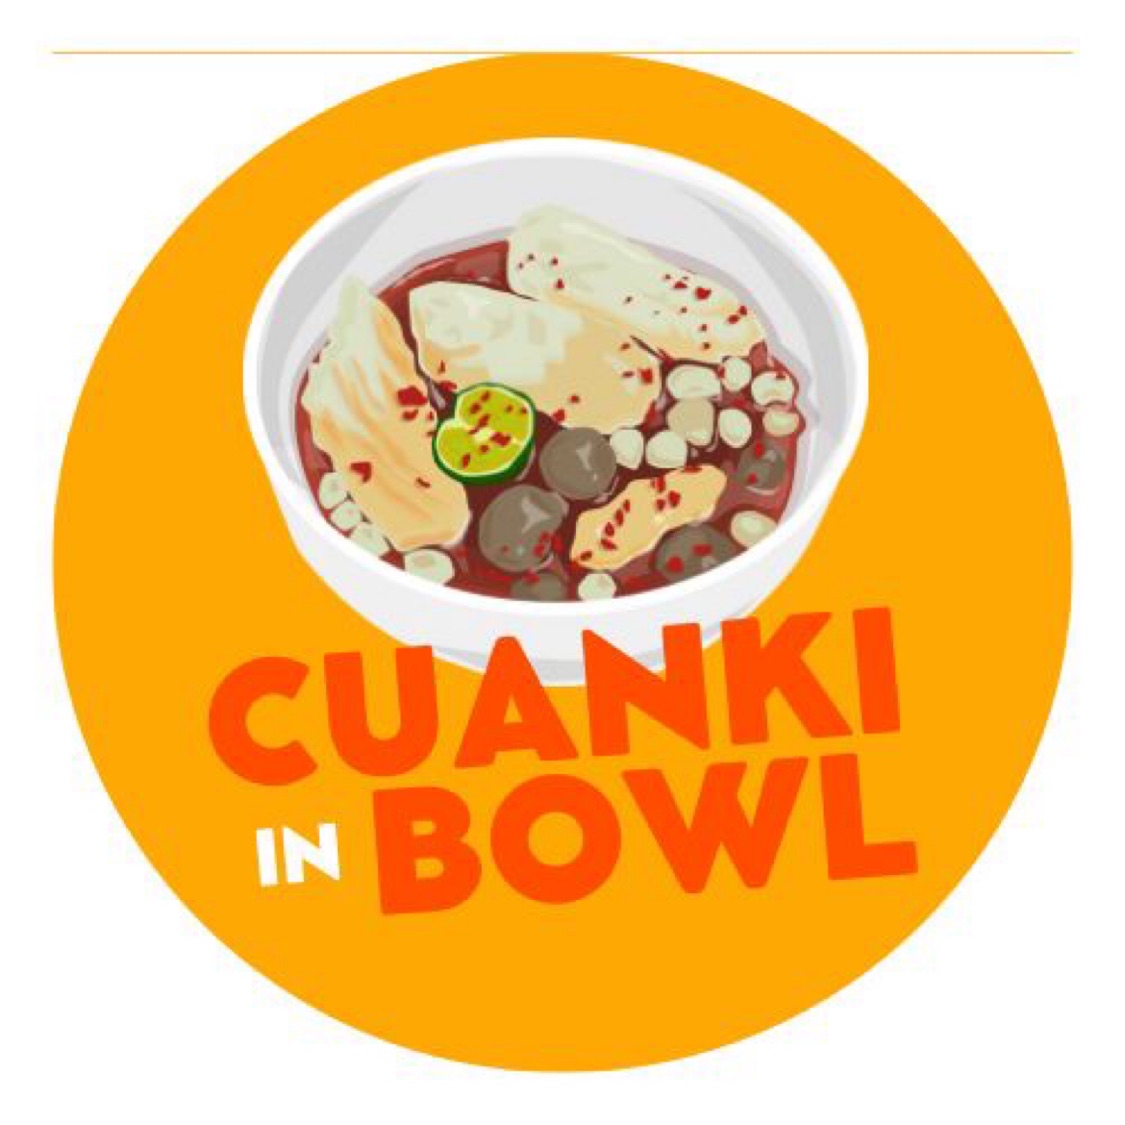 Produk Cuanki Bowl Shopee Indonesia